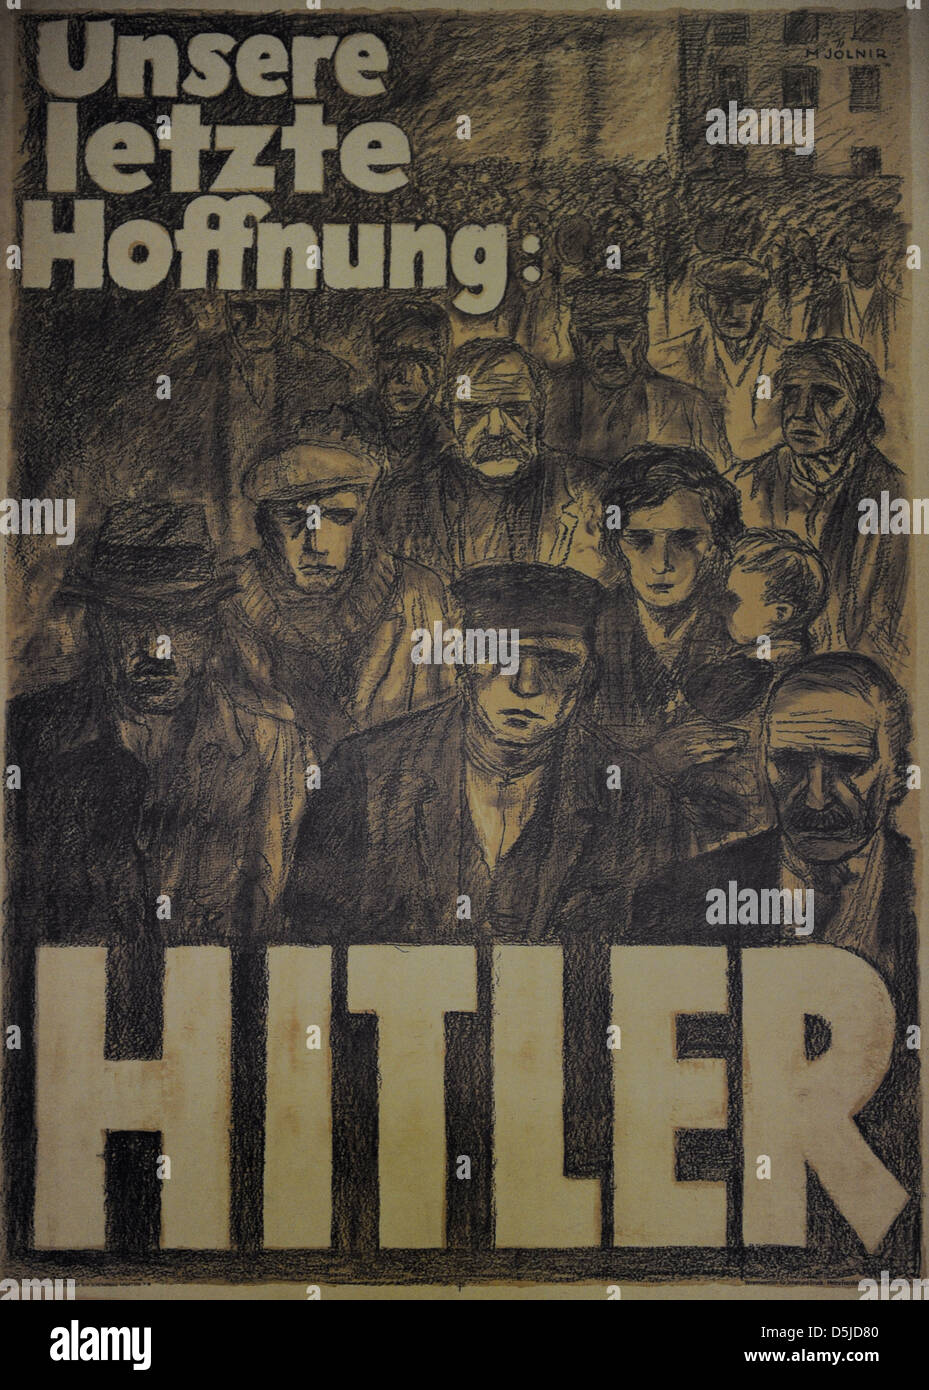 Unsere letzte Hoffnung: Hitler. Wahlplakat der NSDAP, April 1932. Stockfoto